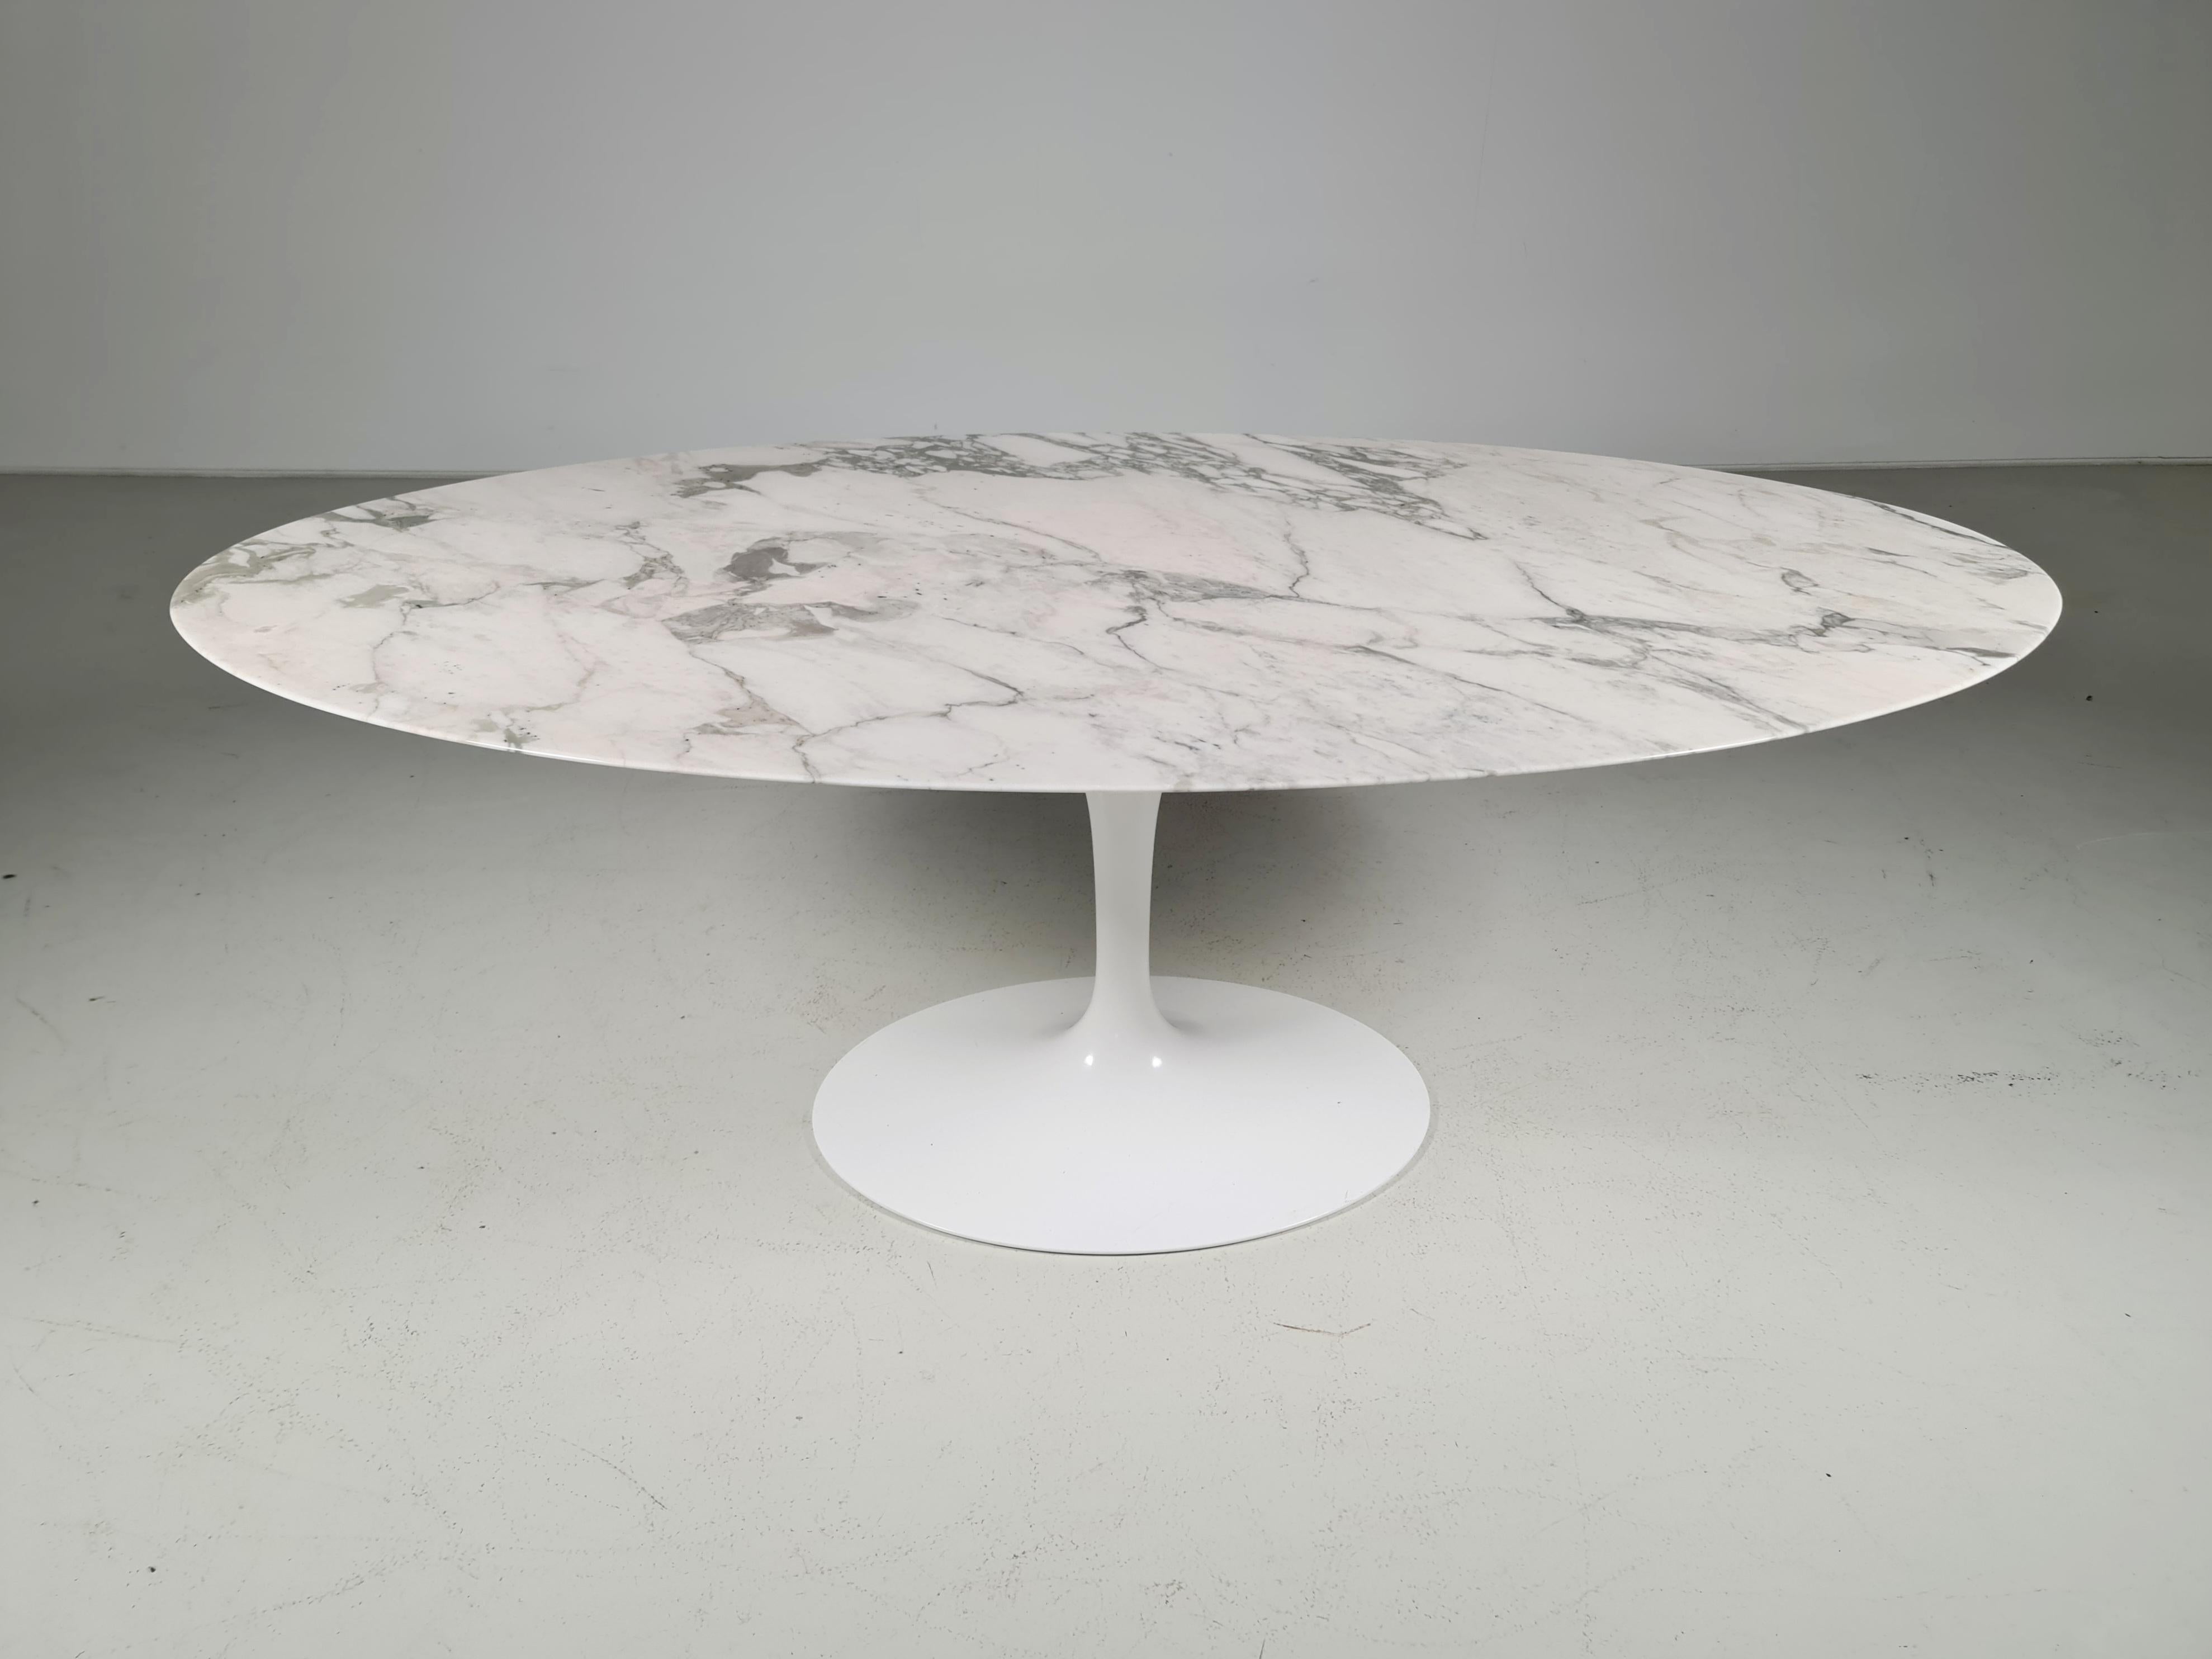 Tulip dining table, Eero Saarinen, Knoll

Arabescato oval marble Dining table by Eero Saarinen for Knoll International. Stunning vanes on the marble.